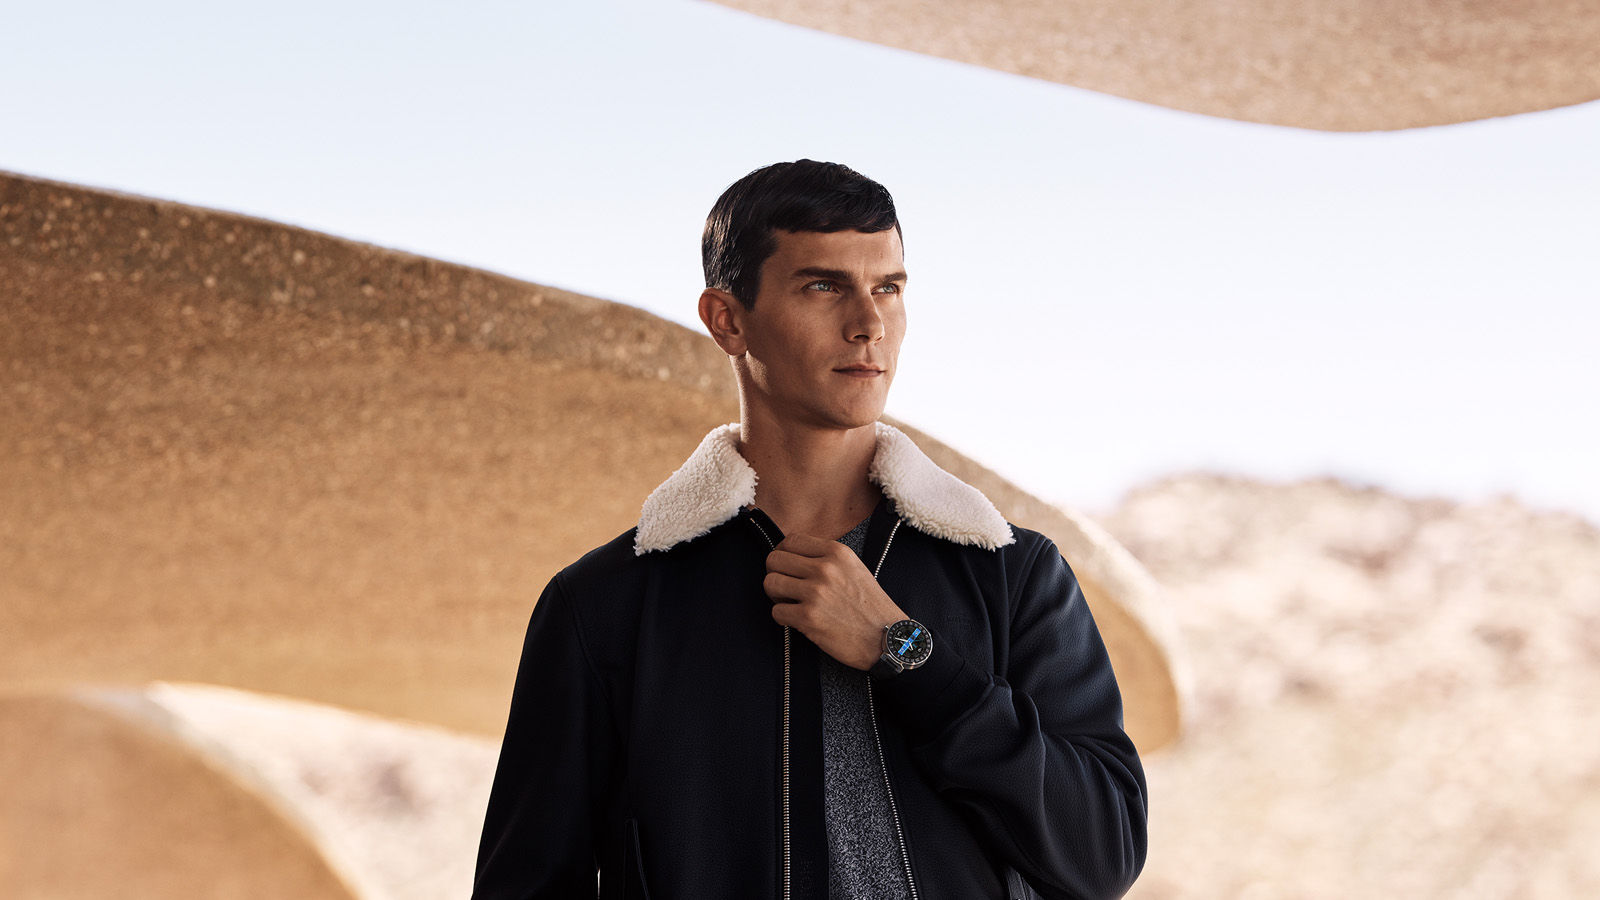 Louis Vuitton's First Luxury Smartwatch - Tambour Horizon